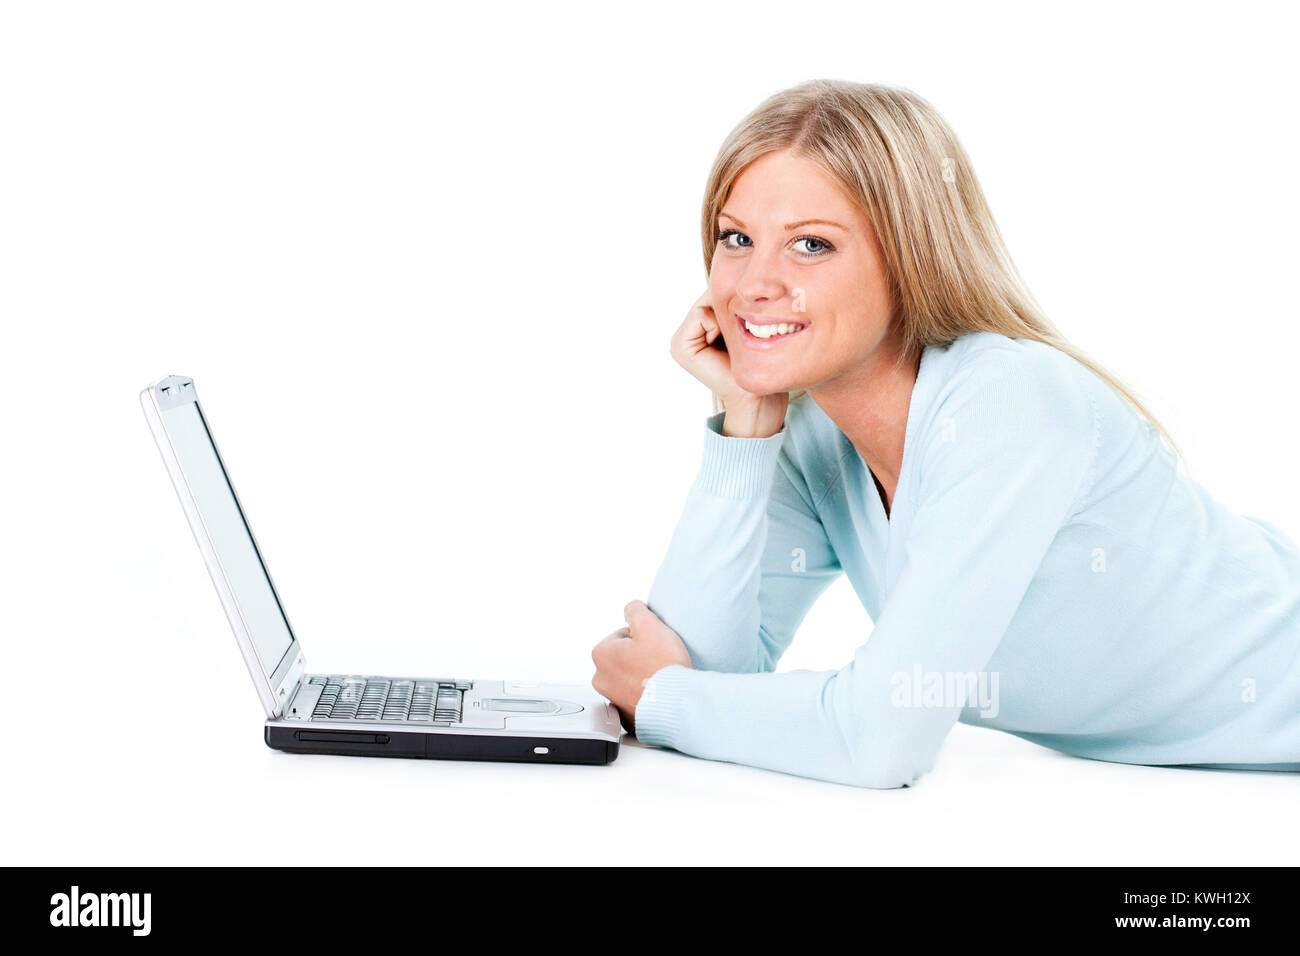 Blonde girl working on laptop, white background Stock Photo